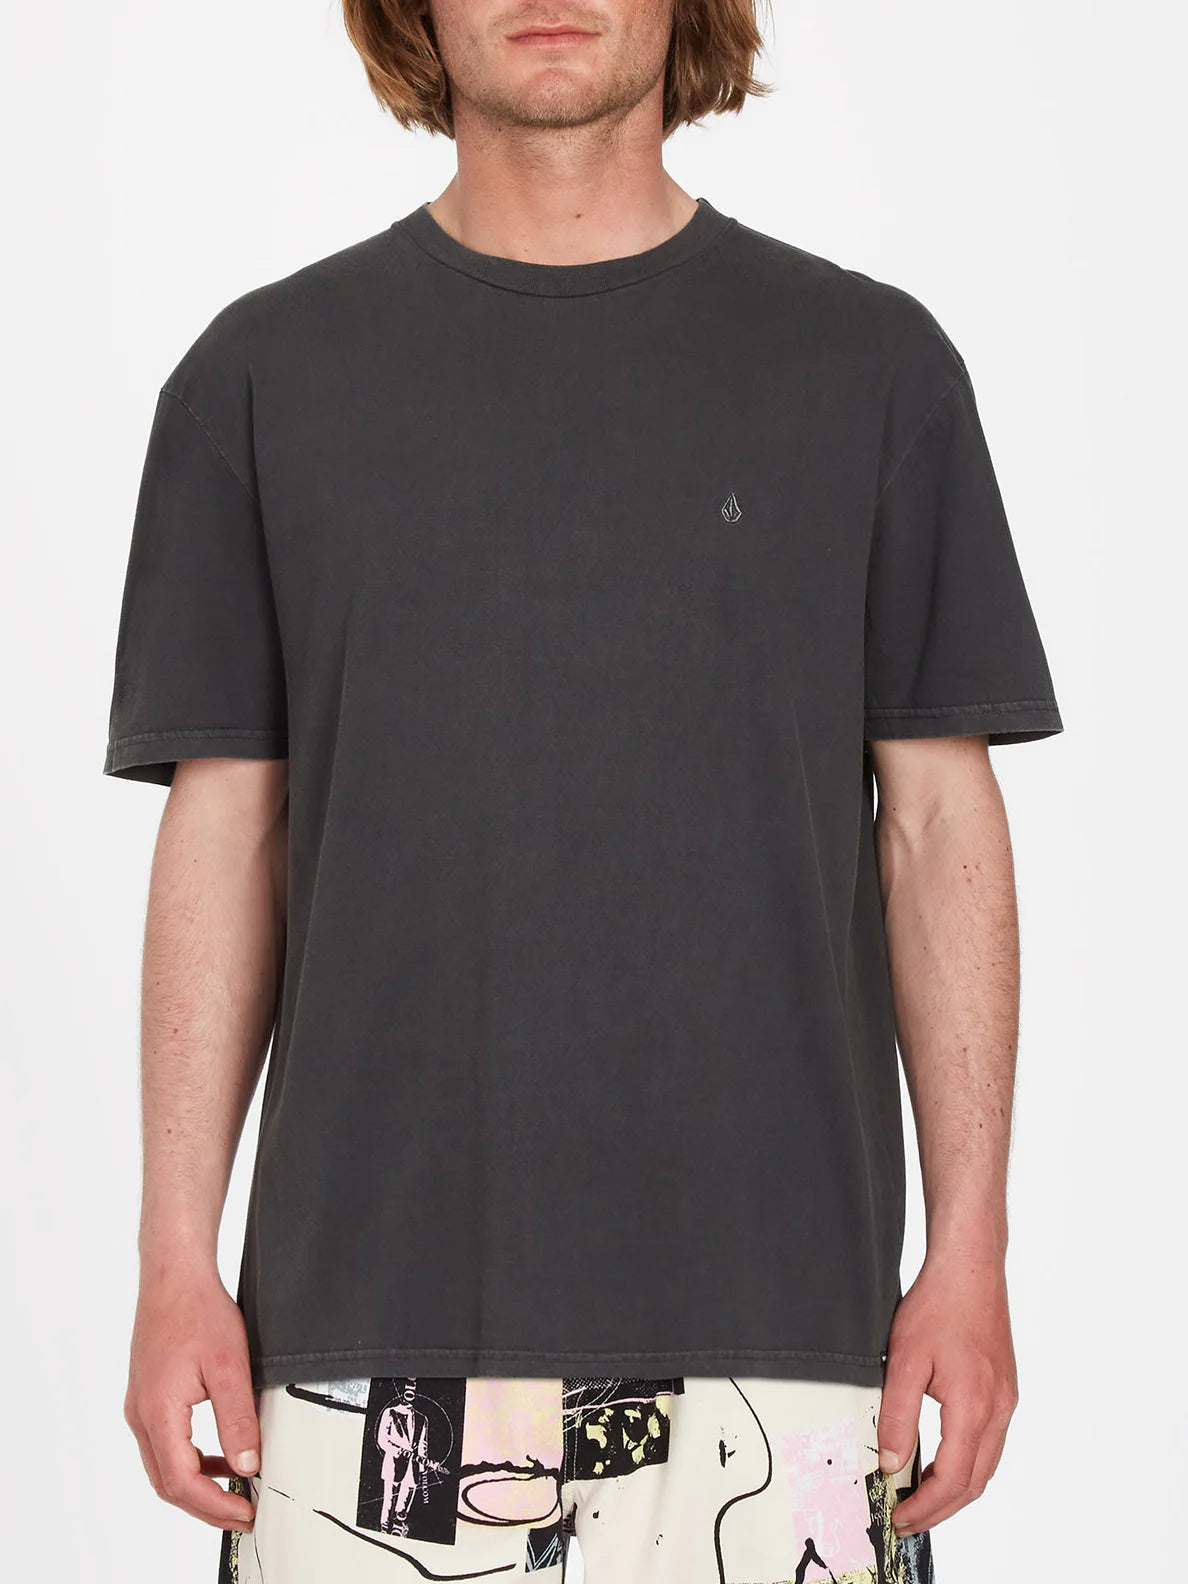 Camiseta Volcom Solid Stone Black | Camisetas de hombre | Camisetas manga corta de hombre | Volcom Shop | surfdevils.com